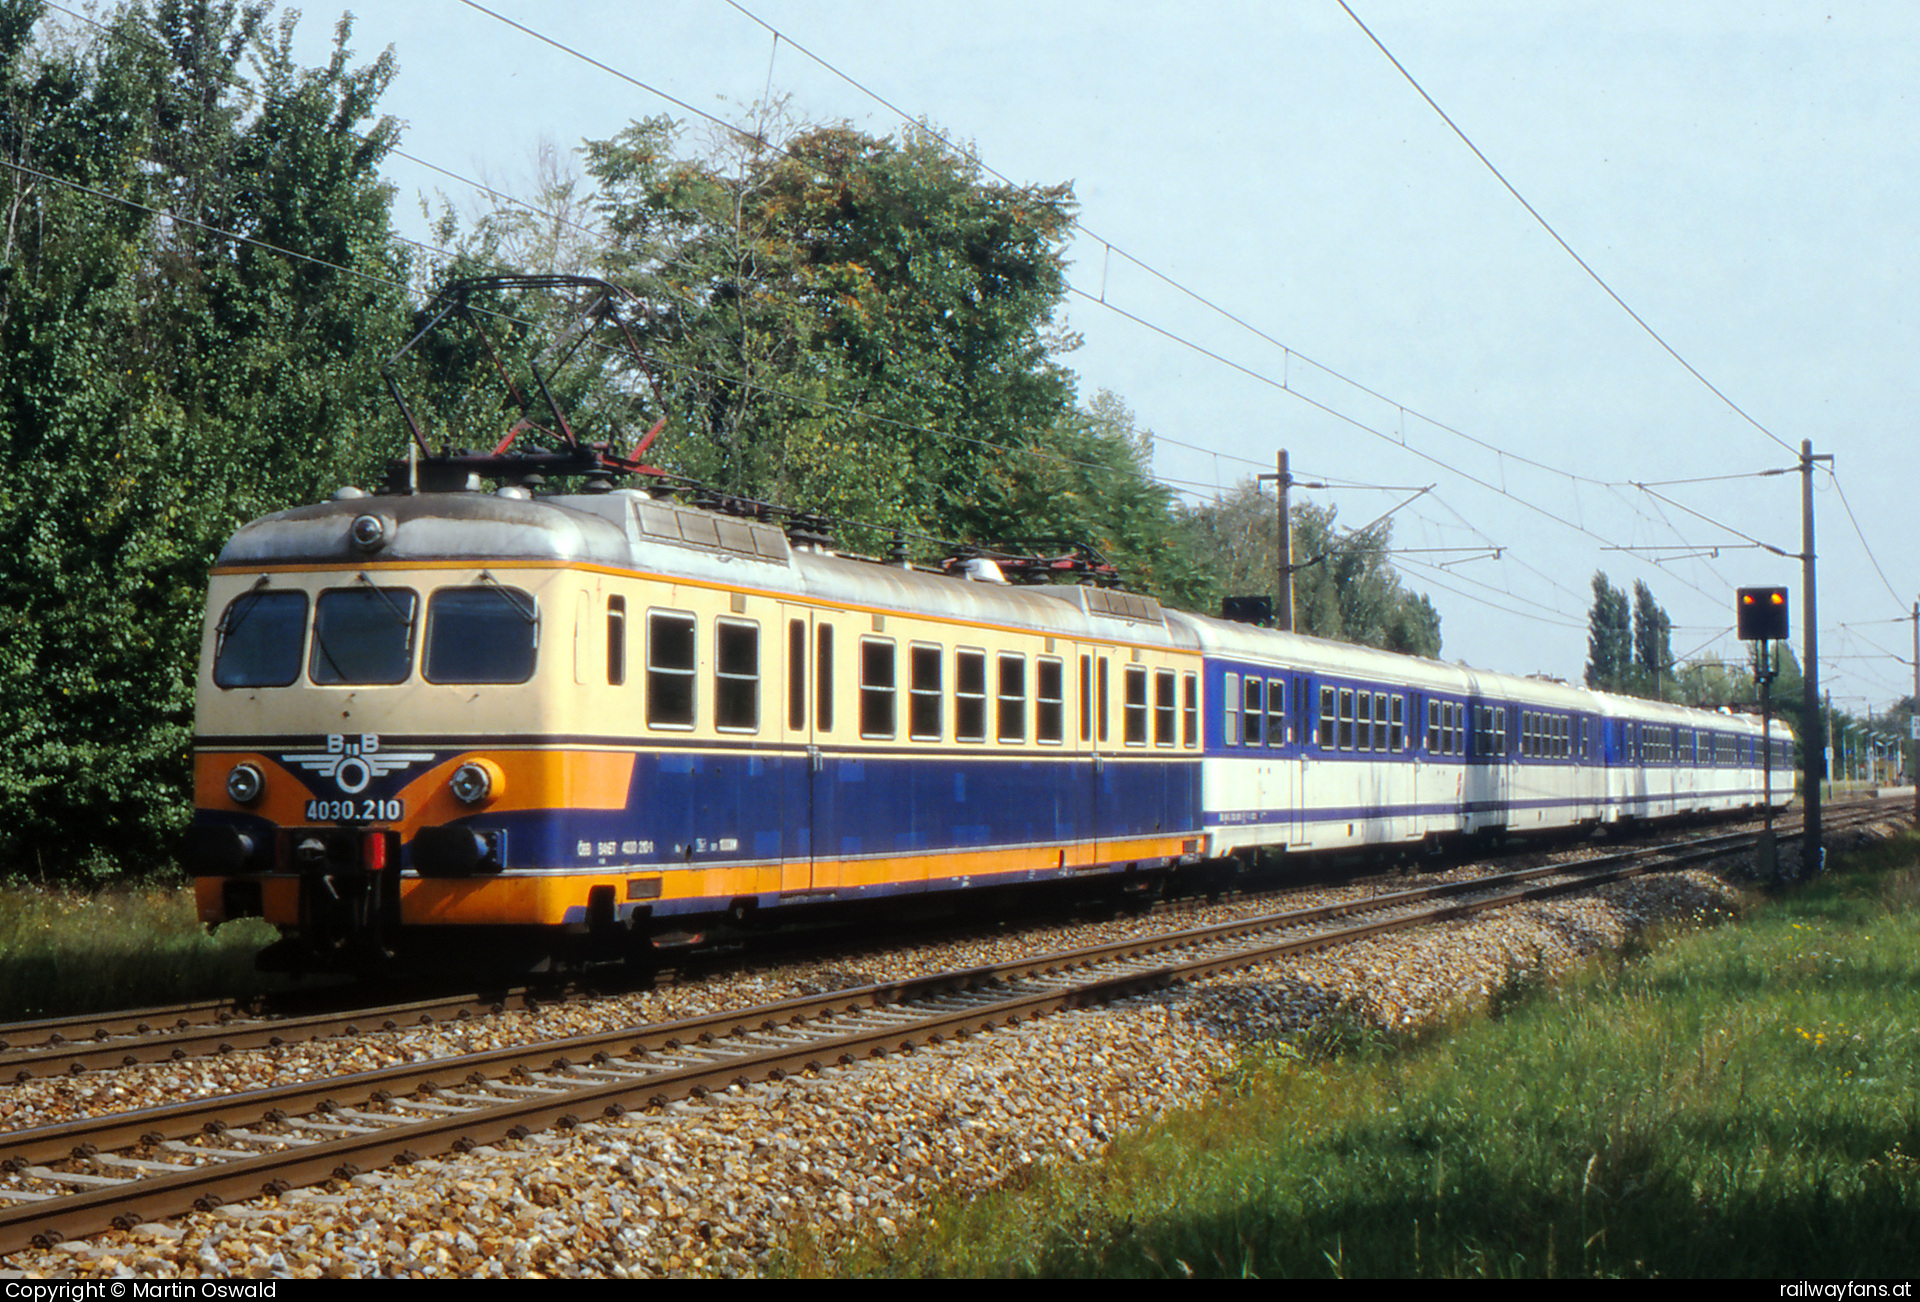 ÖBB 4030 210 in Silberwald Nordbahn | Wien Praterstern - Breclav Railwayfans